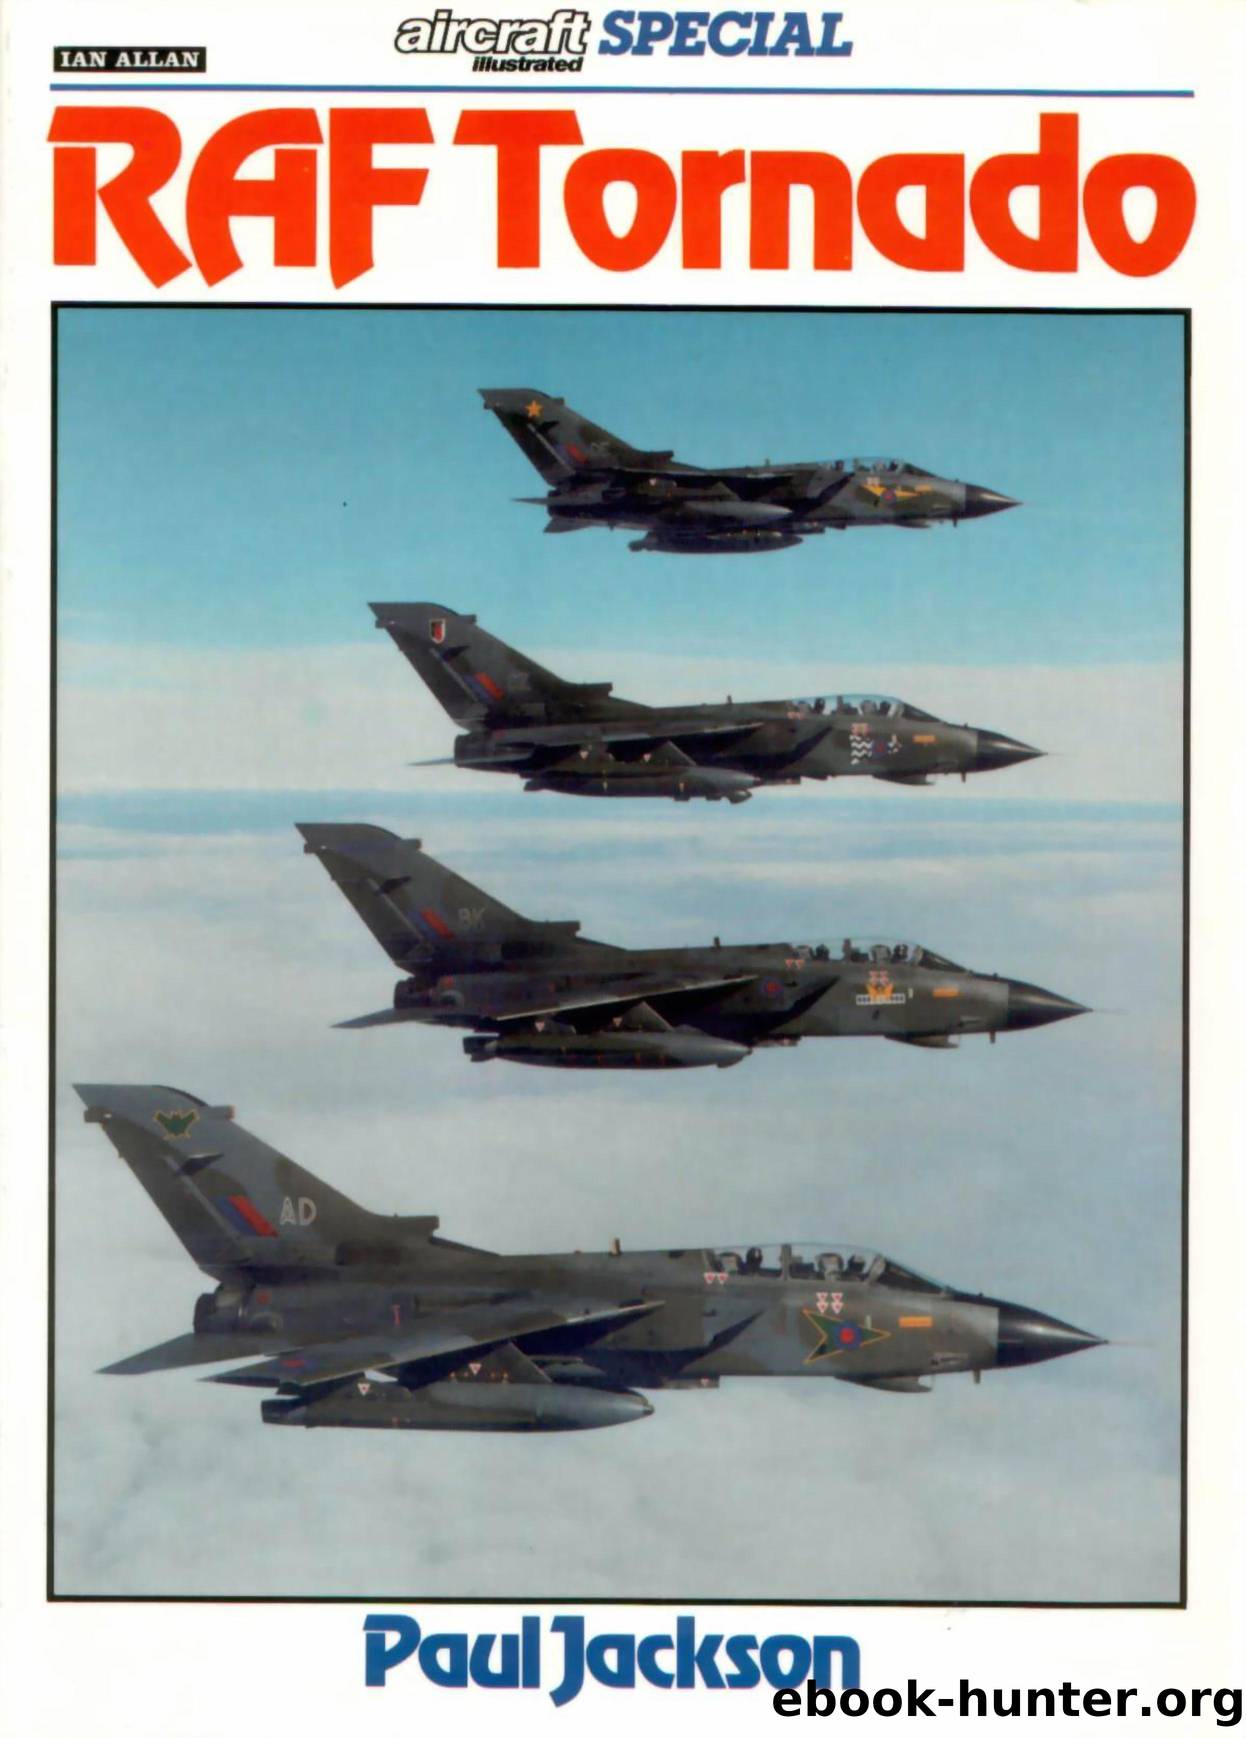 Ian Allan - Aircraft Illustrated Special by Tornado RAF